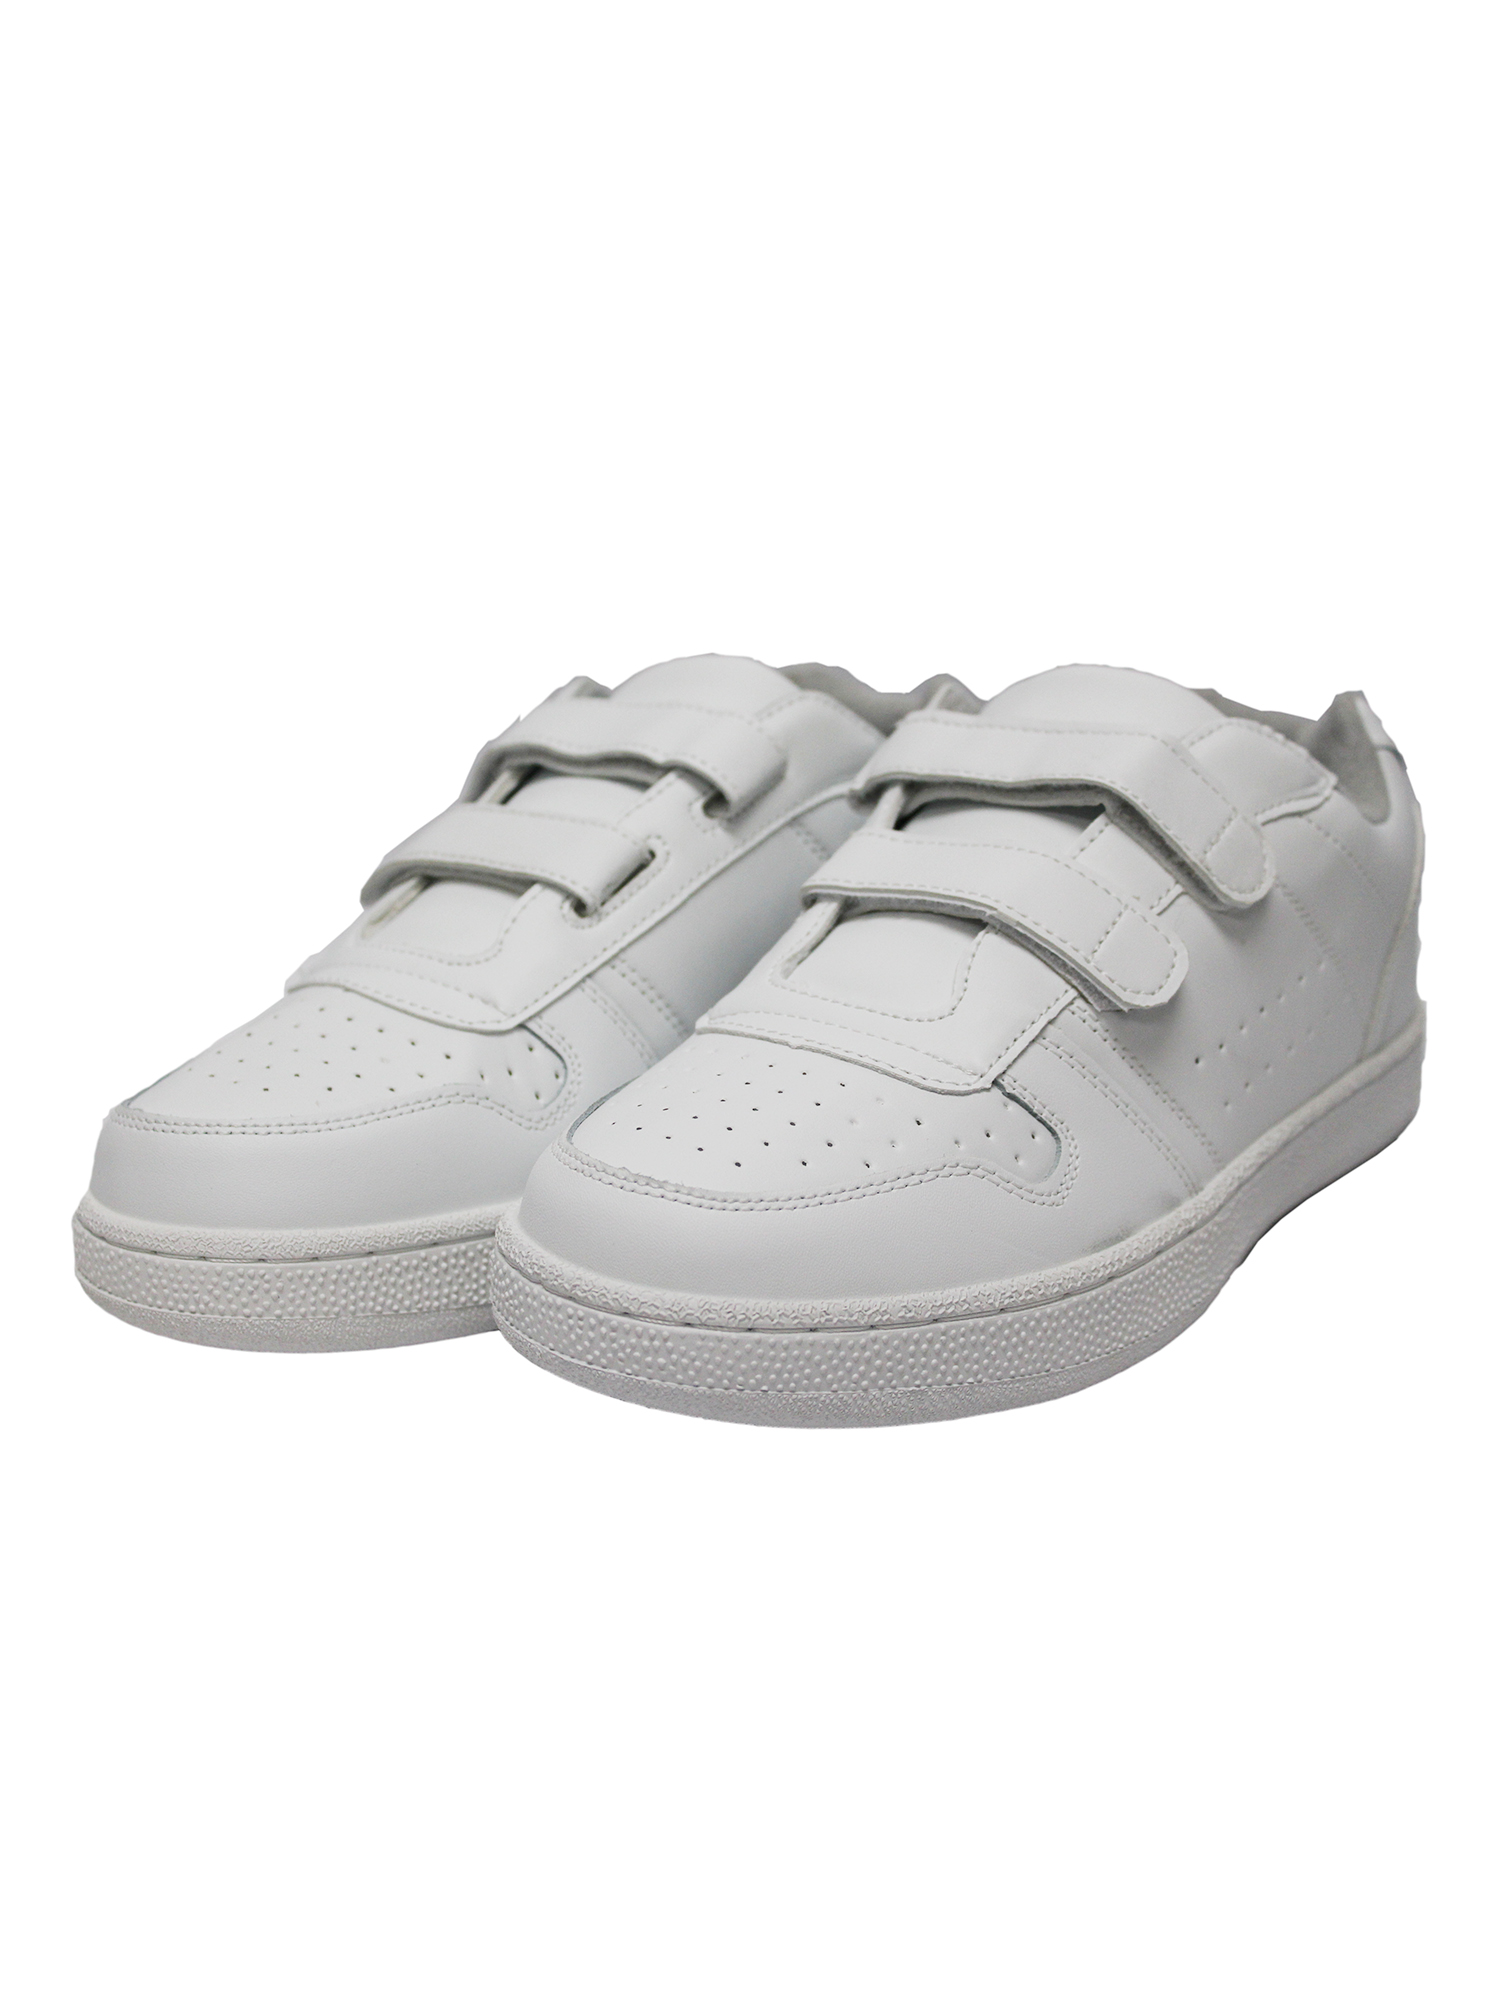 Tanleewa Men's Leather Strap Sneakers Lightweight Hook and Loop Walking Shoe Size 13 Adult Male - image 2 of 5